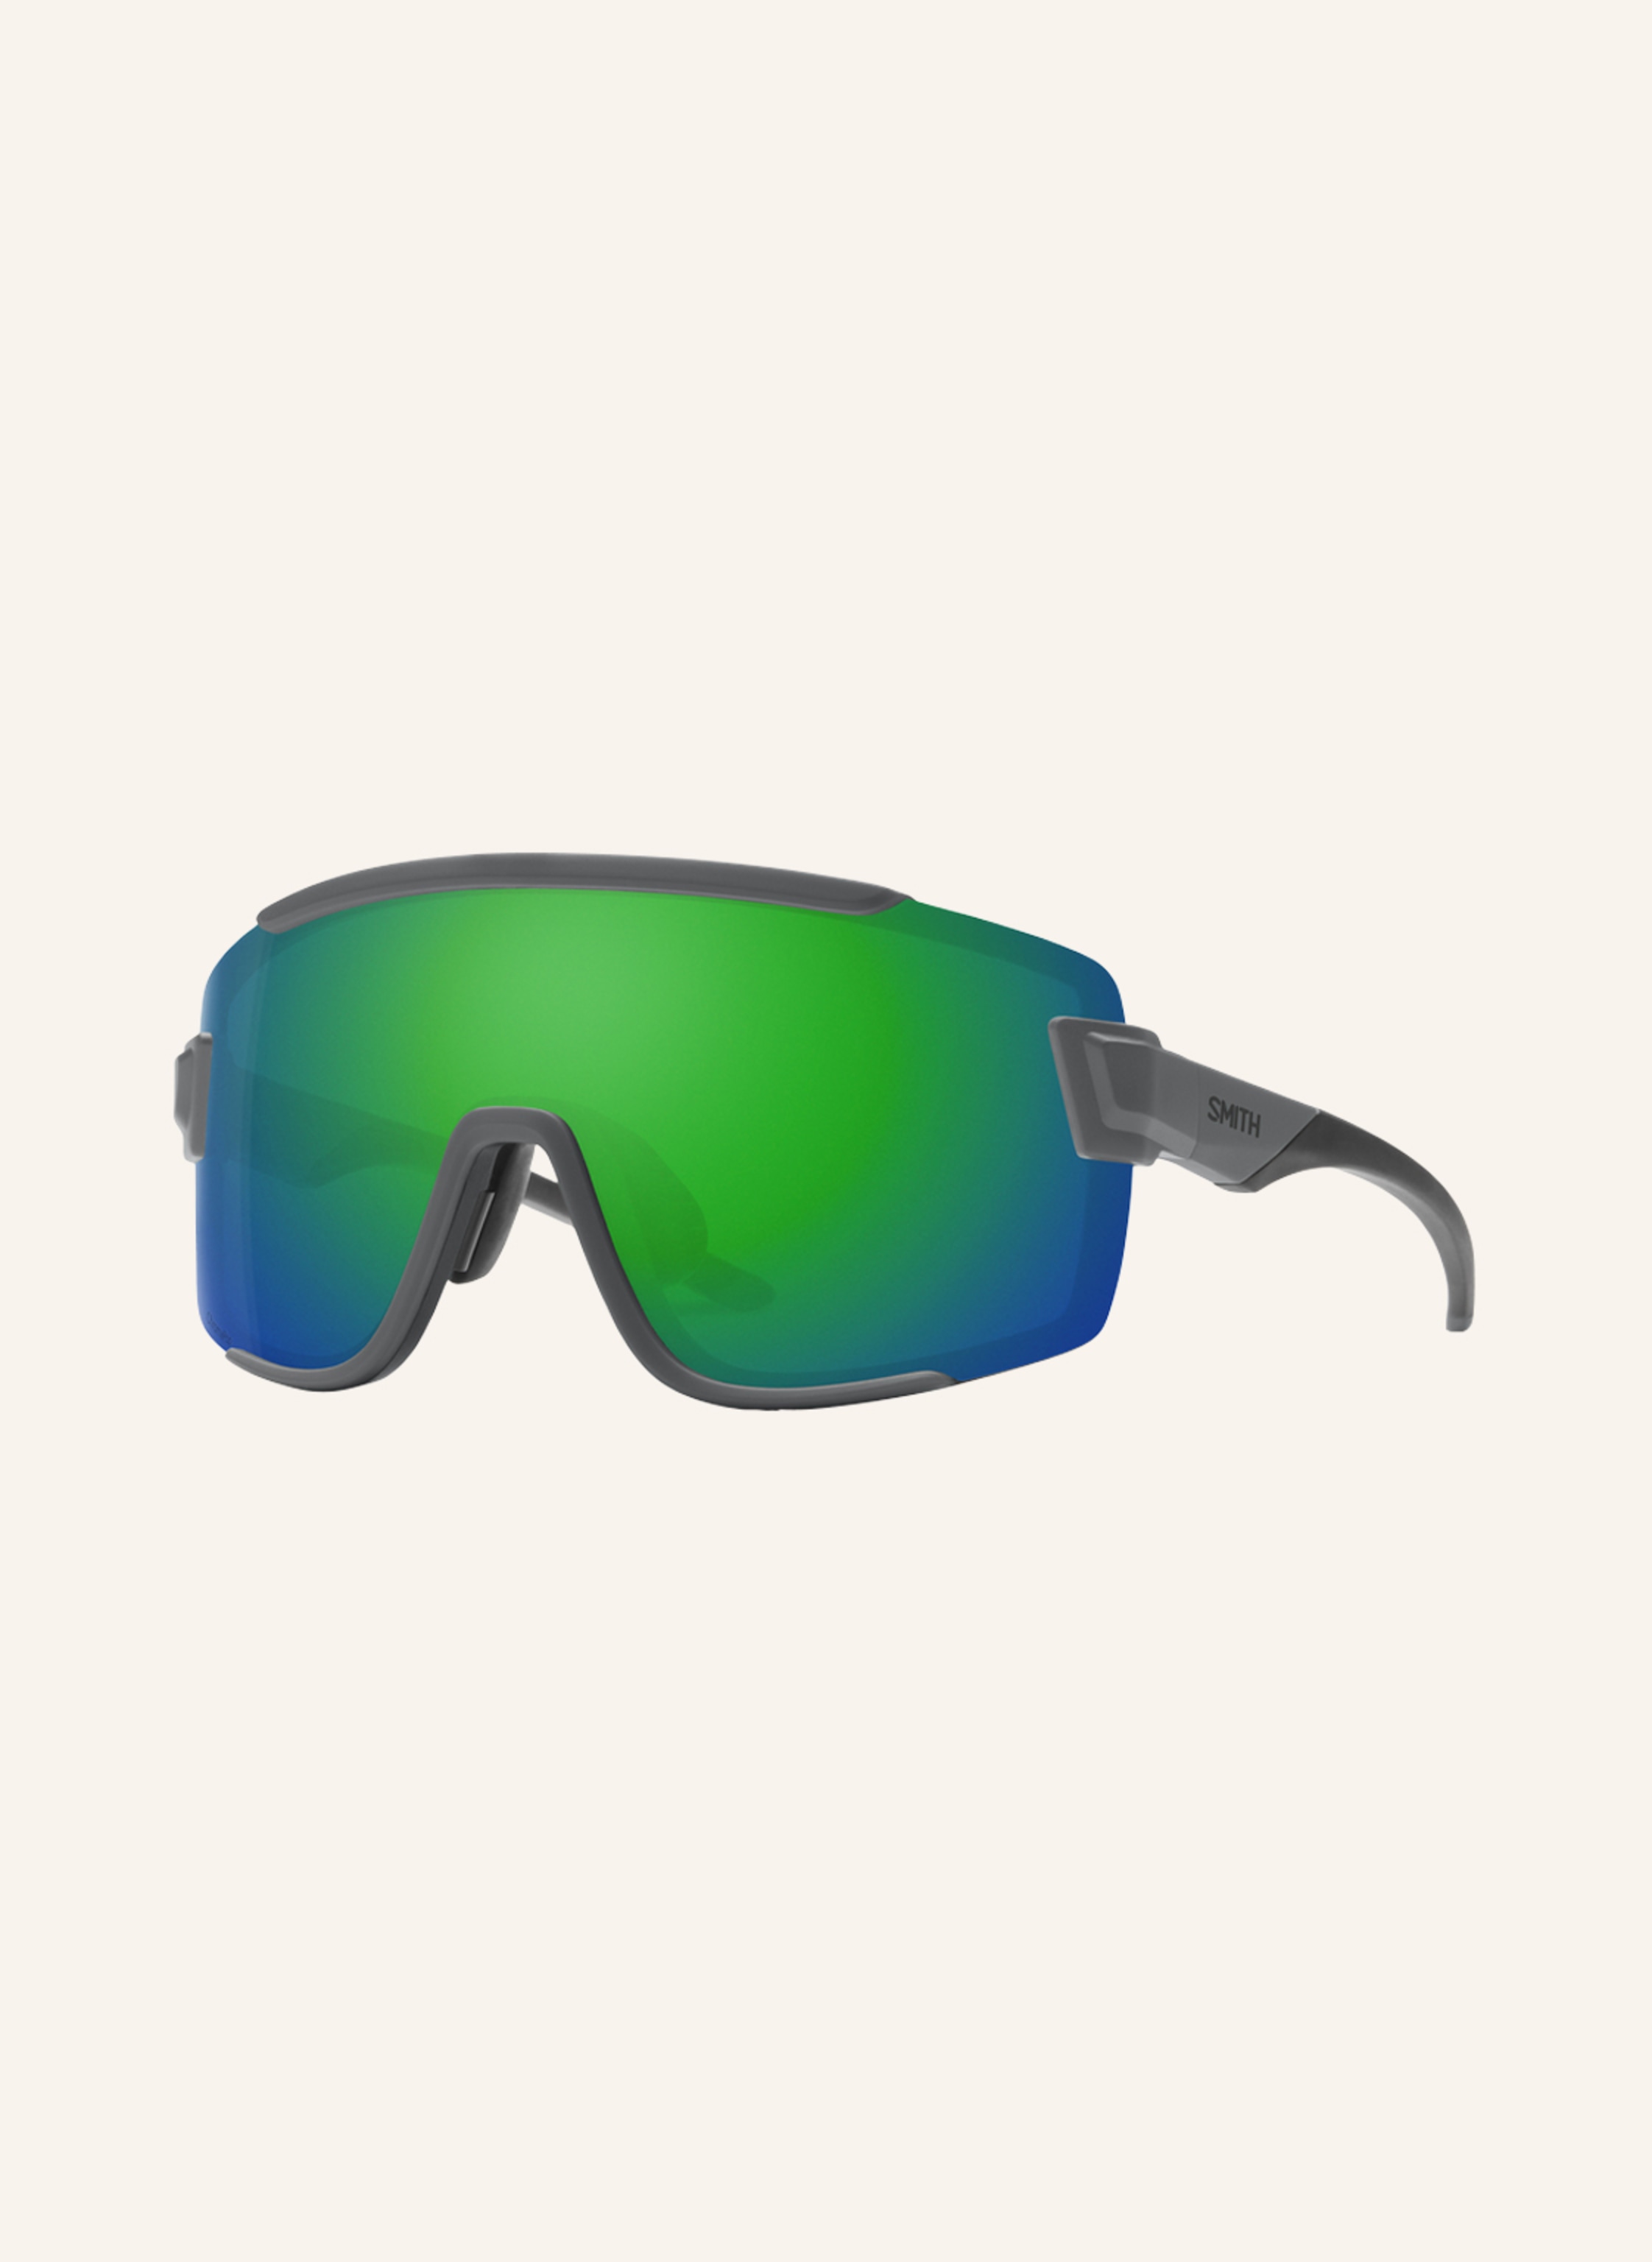 SMITH Cycling sunglasses WILDCAT in chromapop green mirror matte cement |  Breuninger